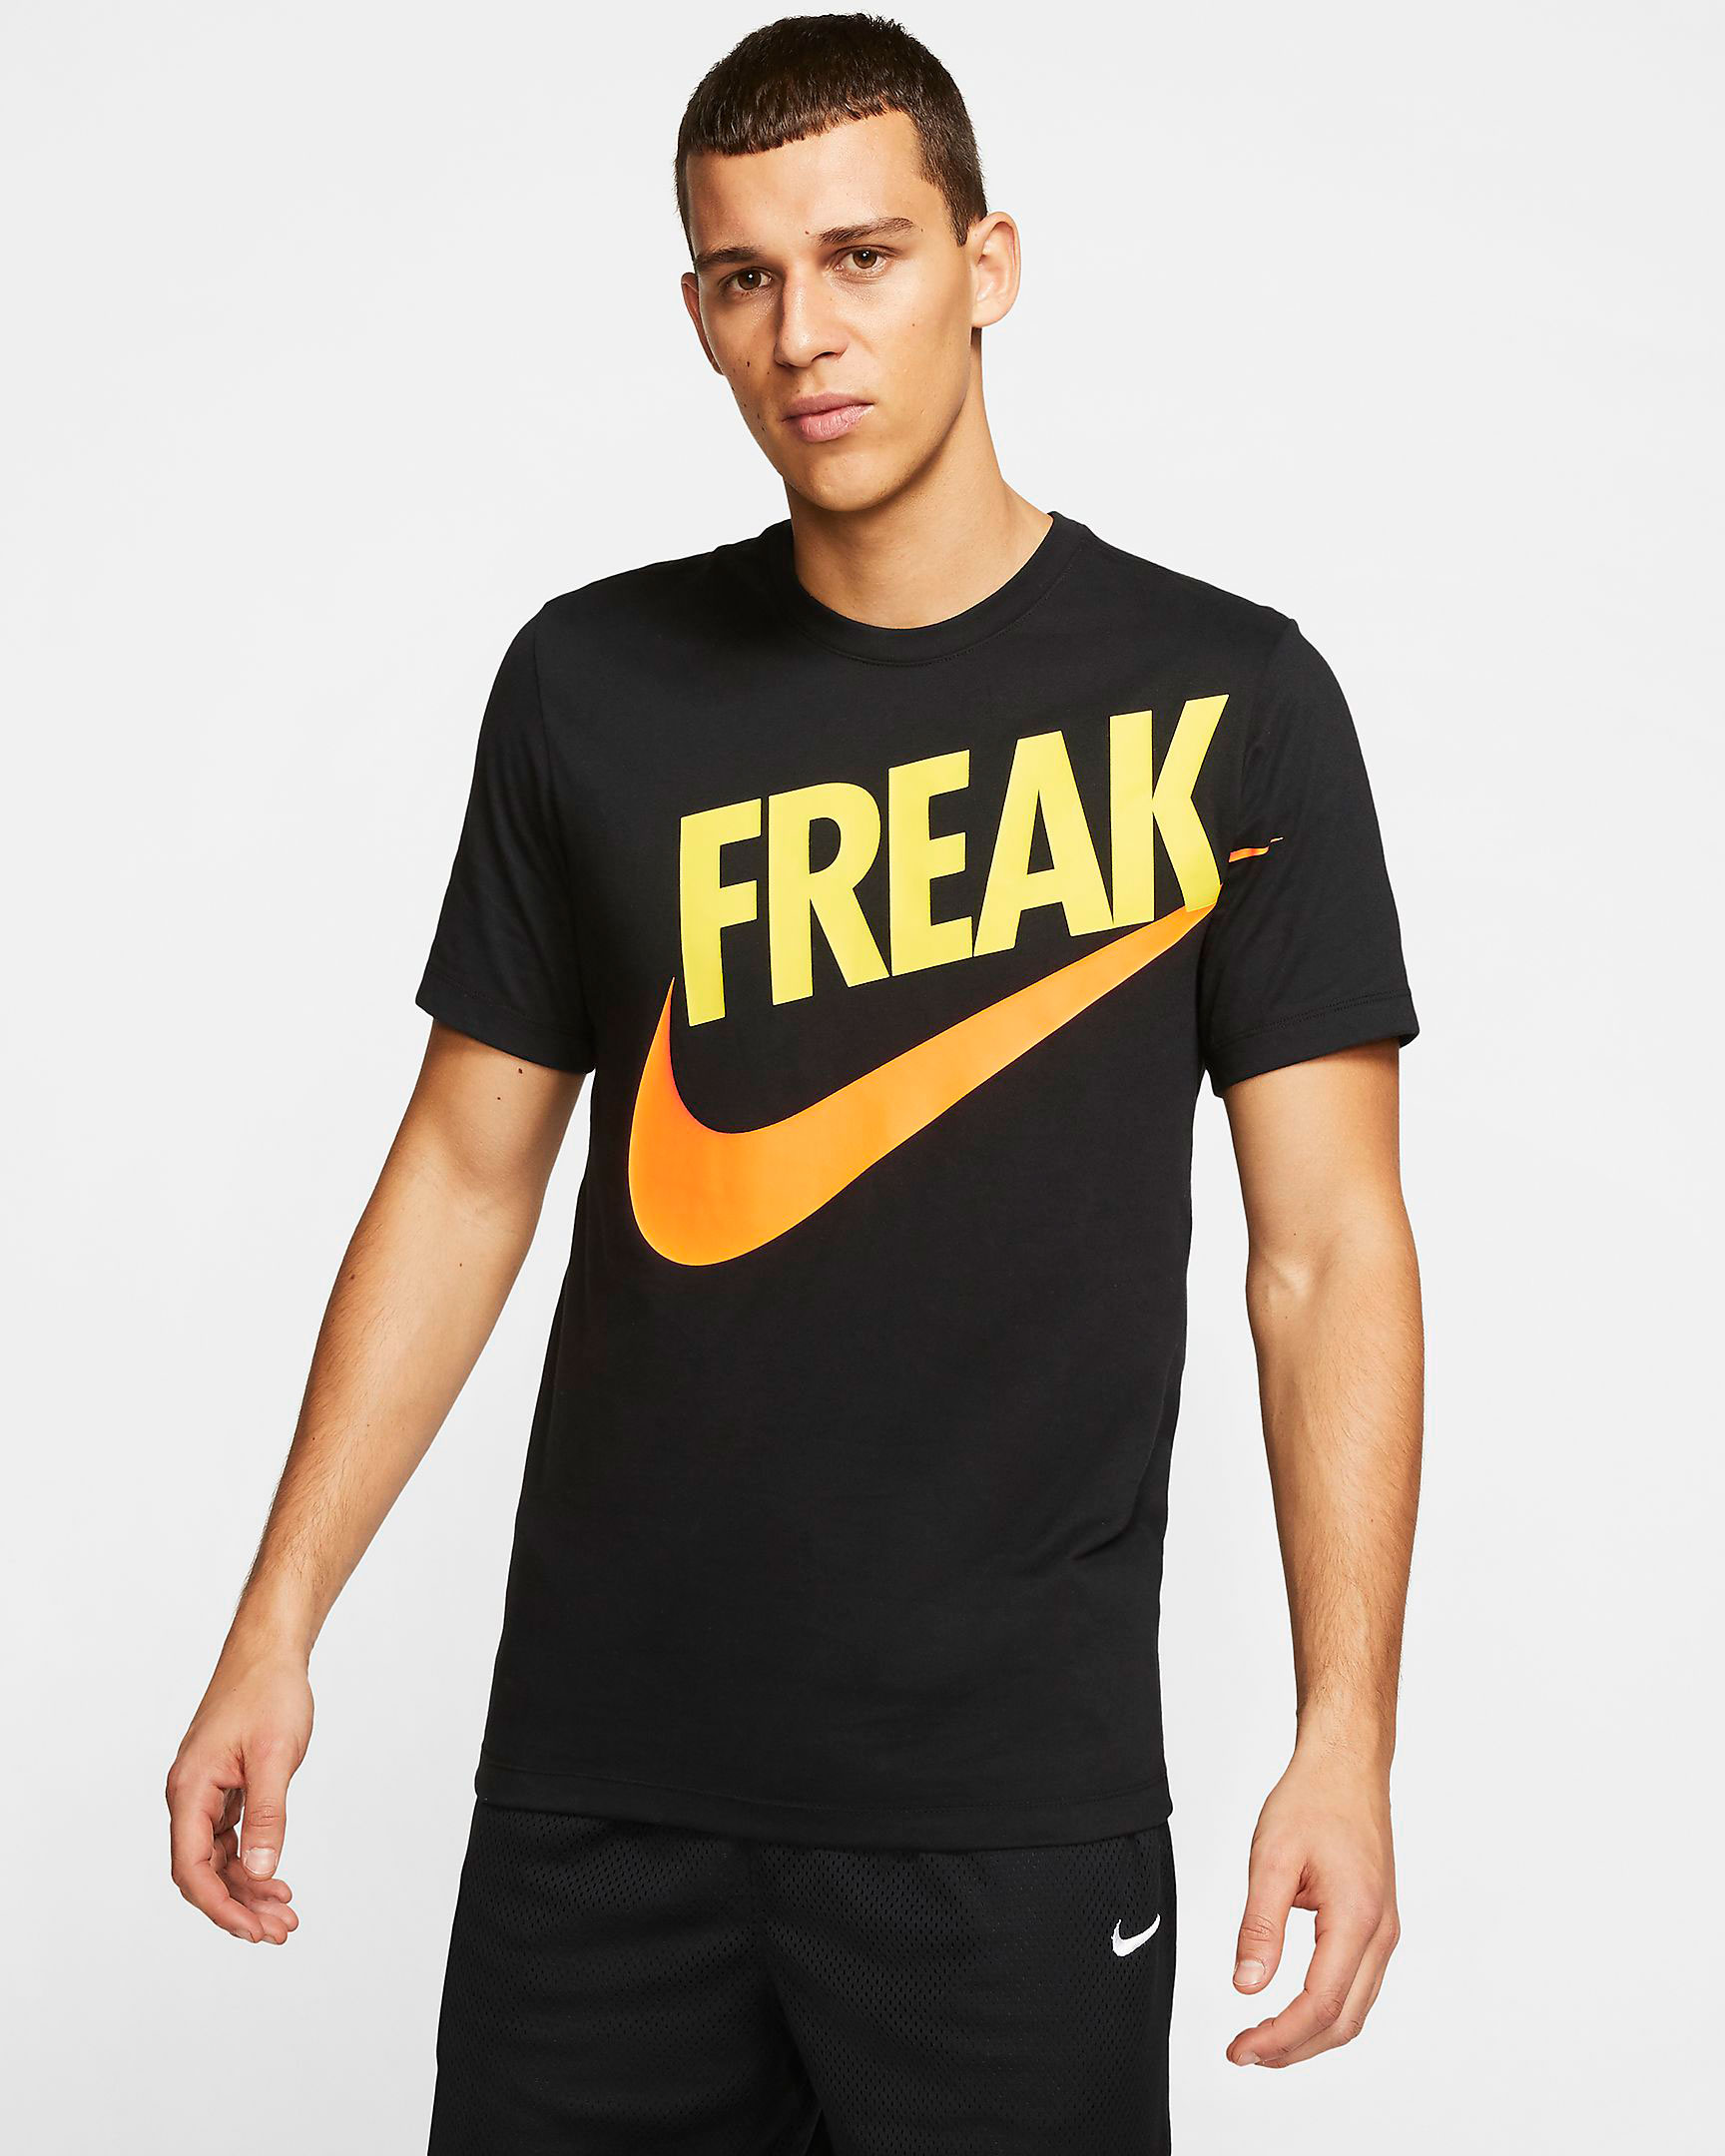 nike-giannis-freak-t-shirt-black-yellow-orange